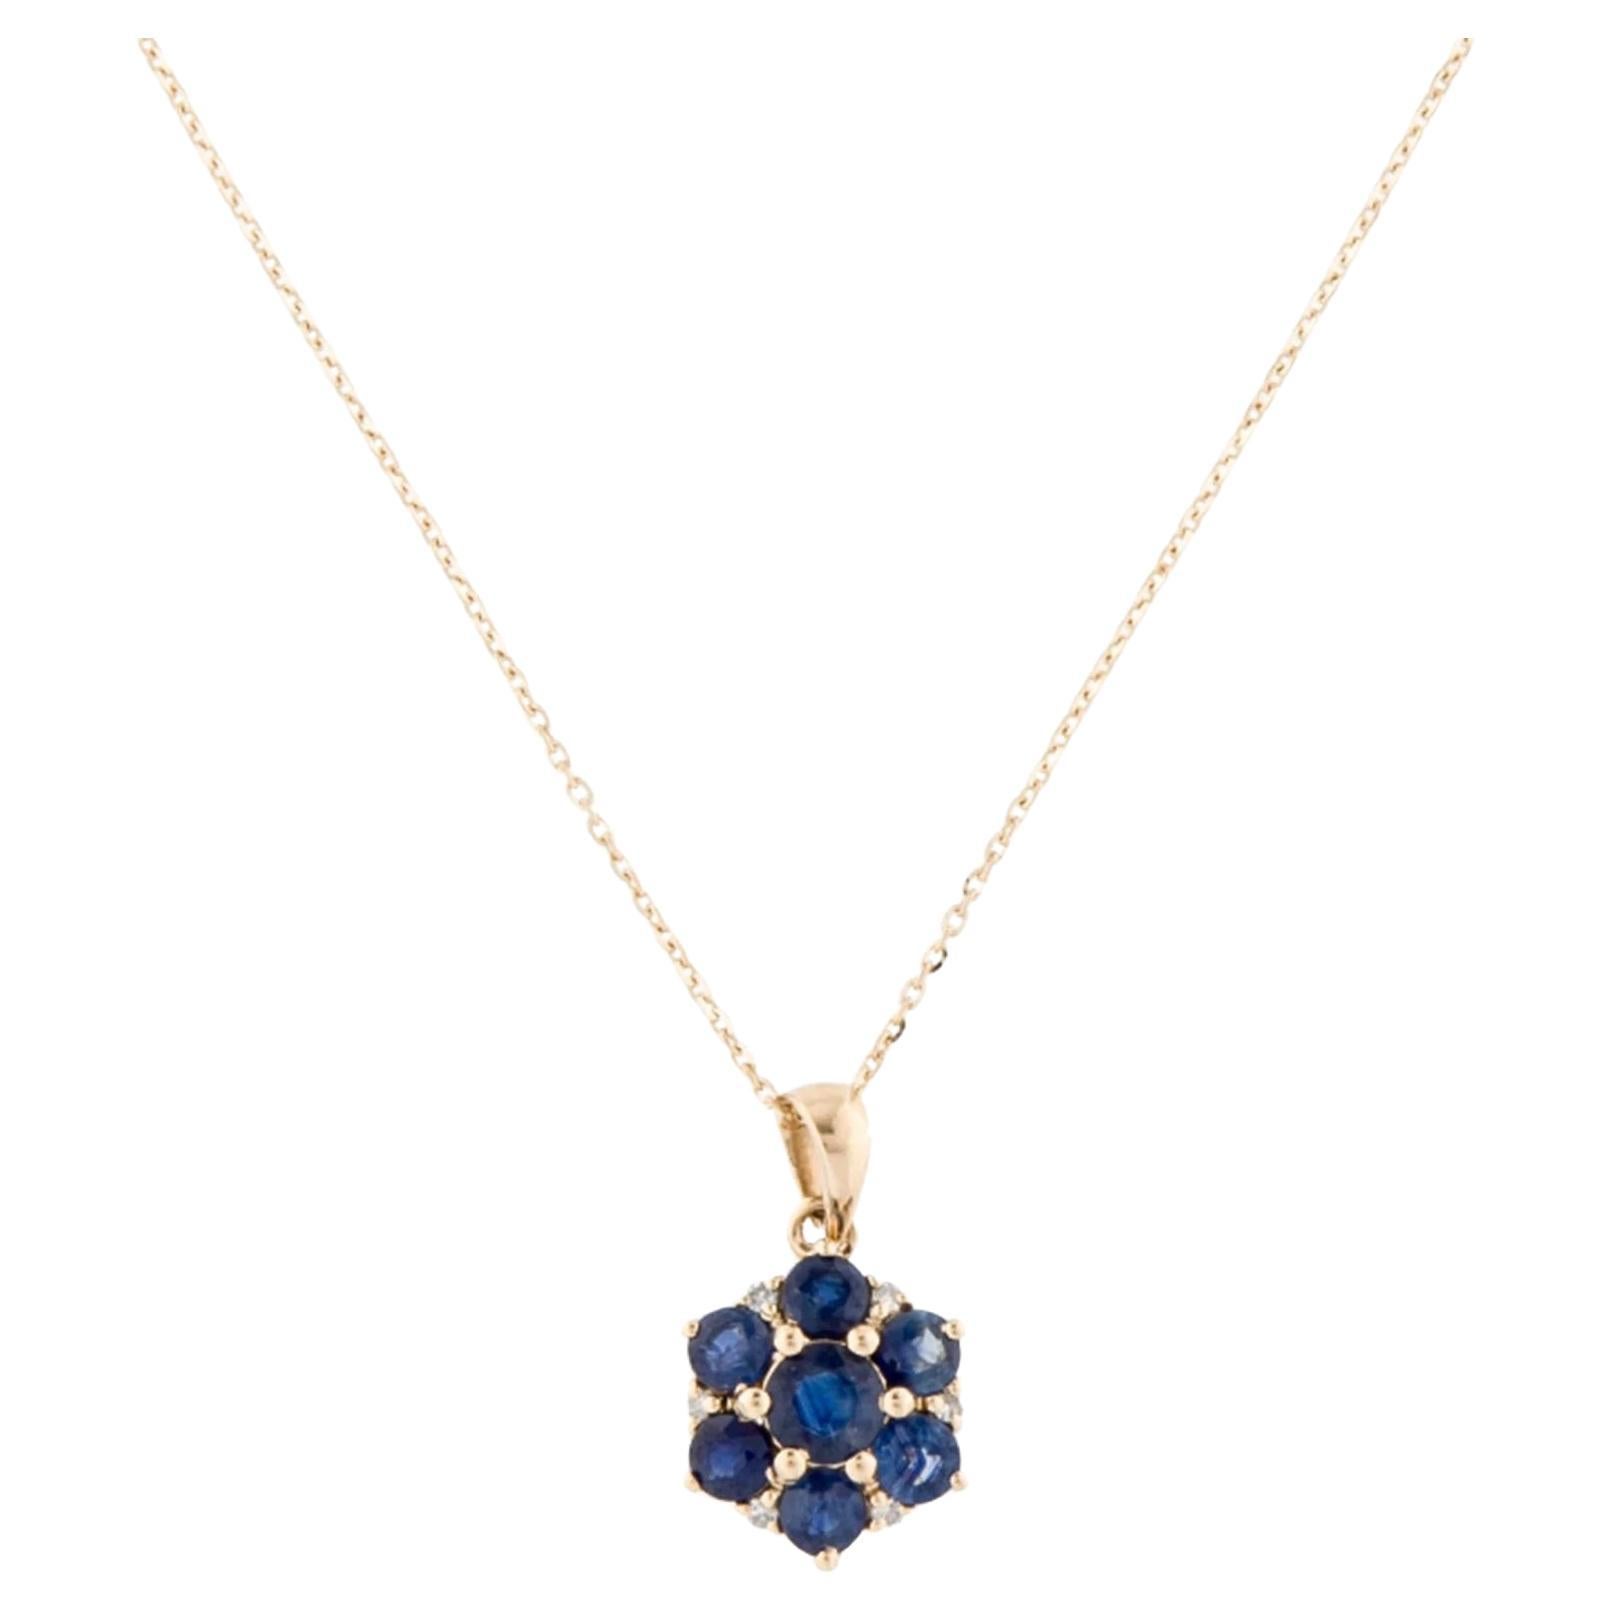 14K Sapphire Flower Pendant Necklace - 1.07 Carat Round Sapphire - 16" Length